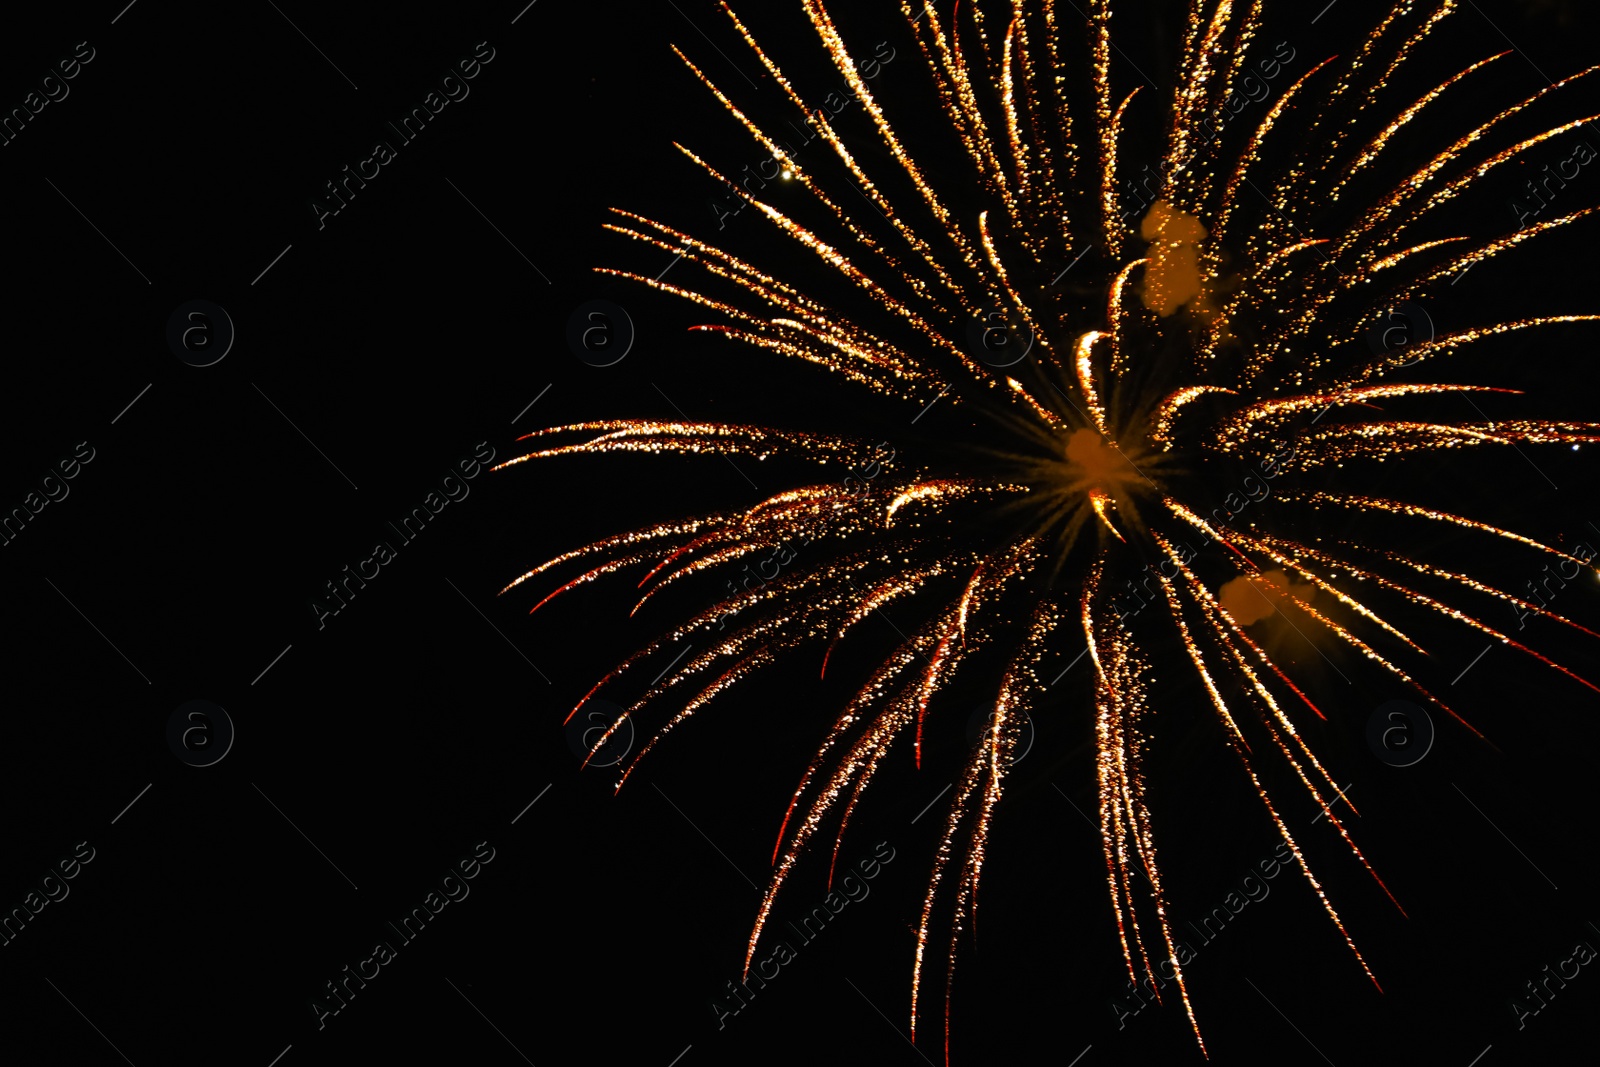 Photo of Beautiful bright firework lighting up night sky